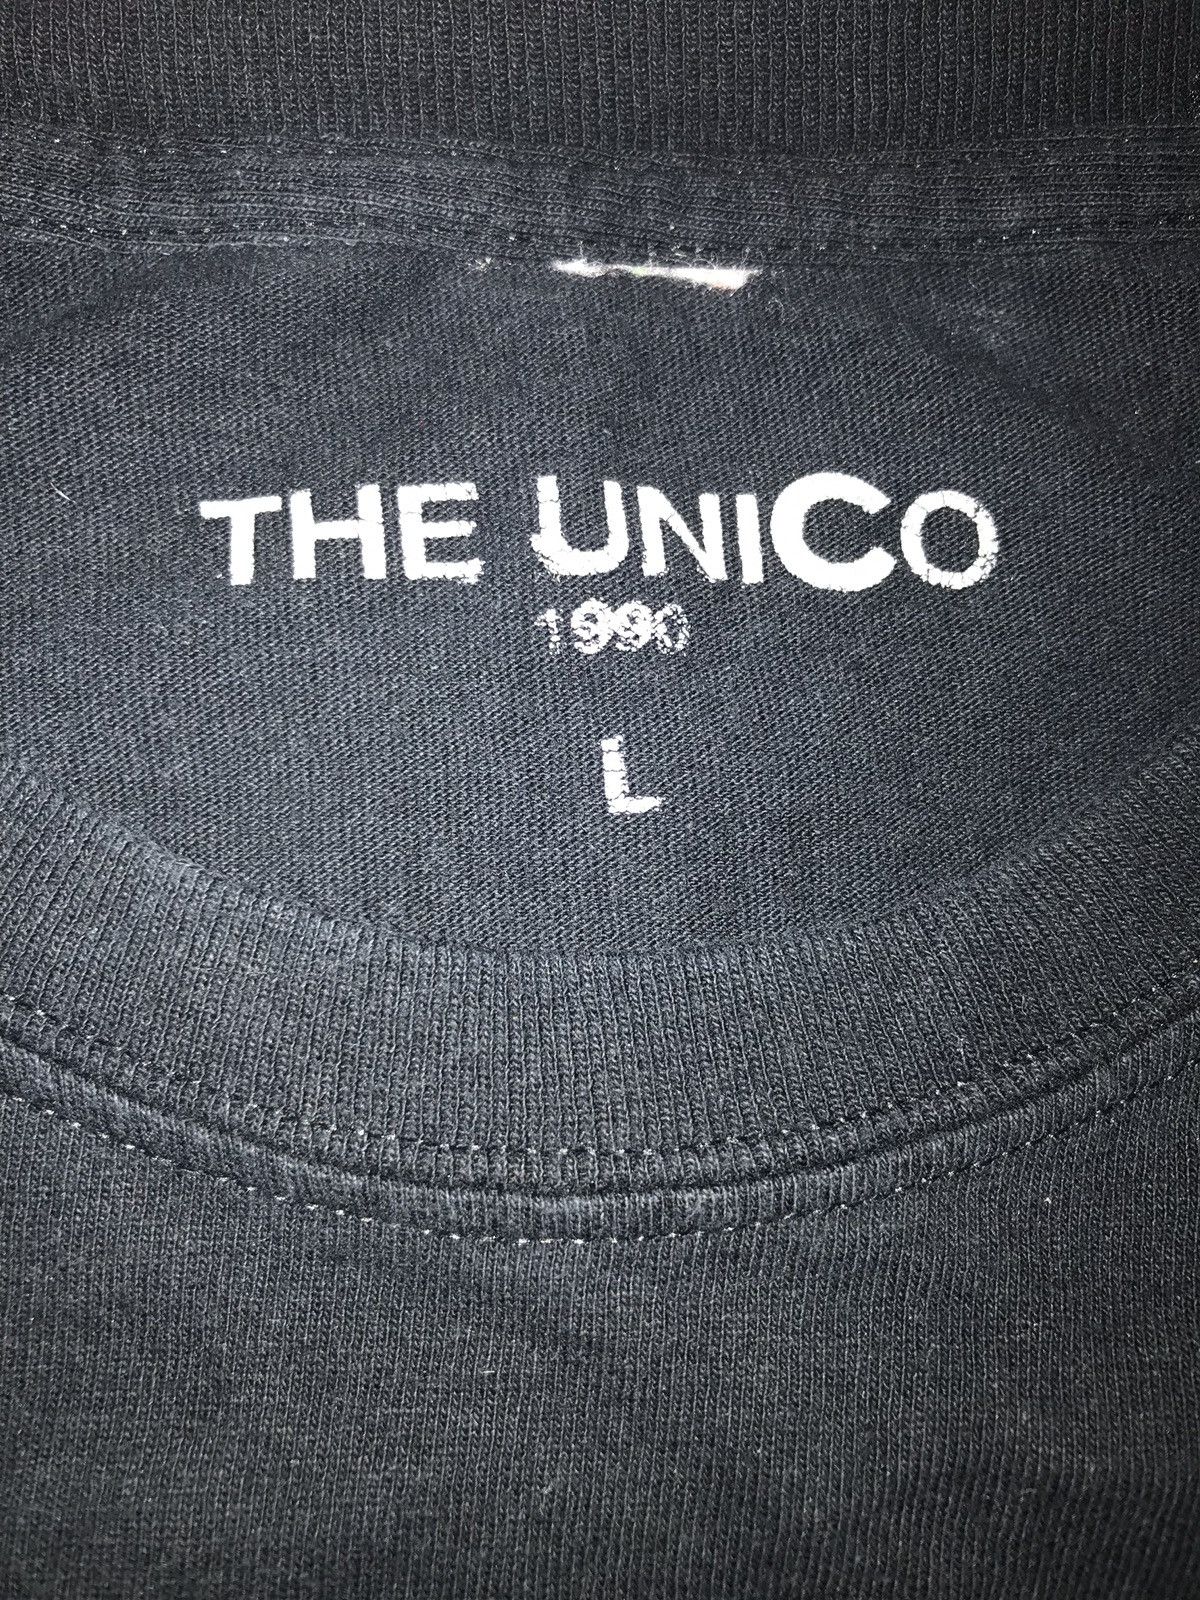 The Unico 1990 The Unico 1990 “who shot you?” Tee Size US L / EU 52-54 / 3 - 2 Preview